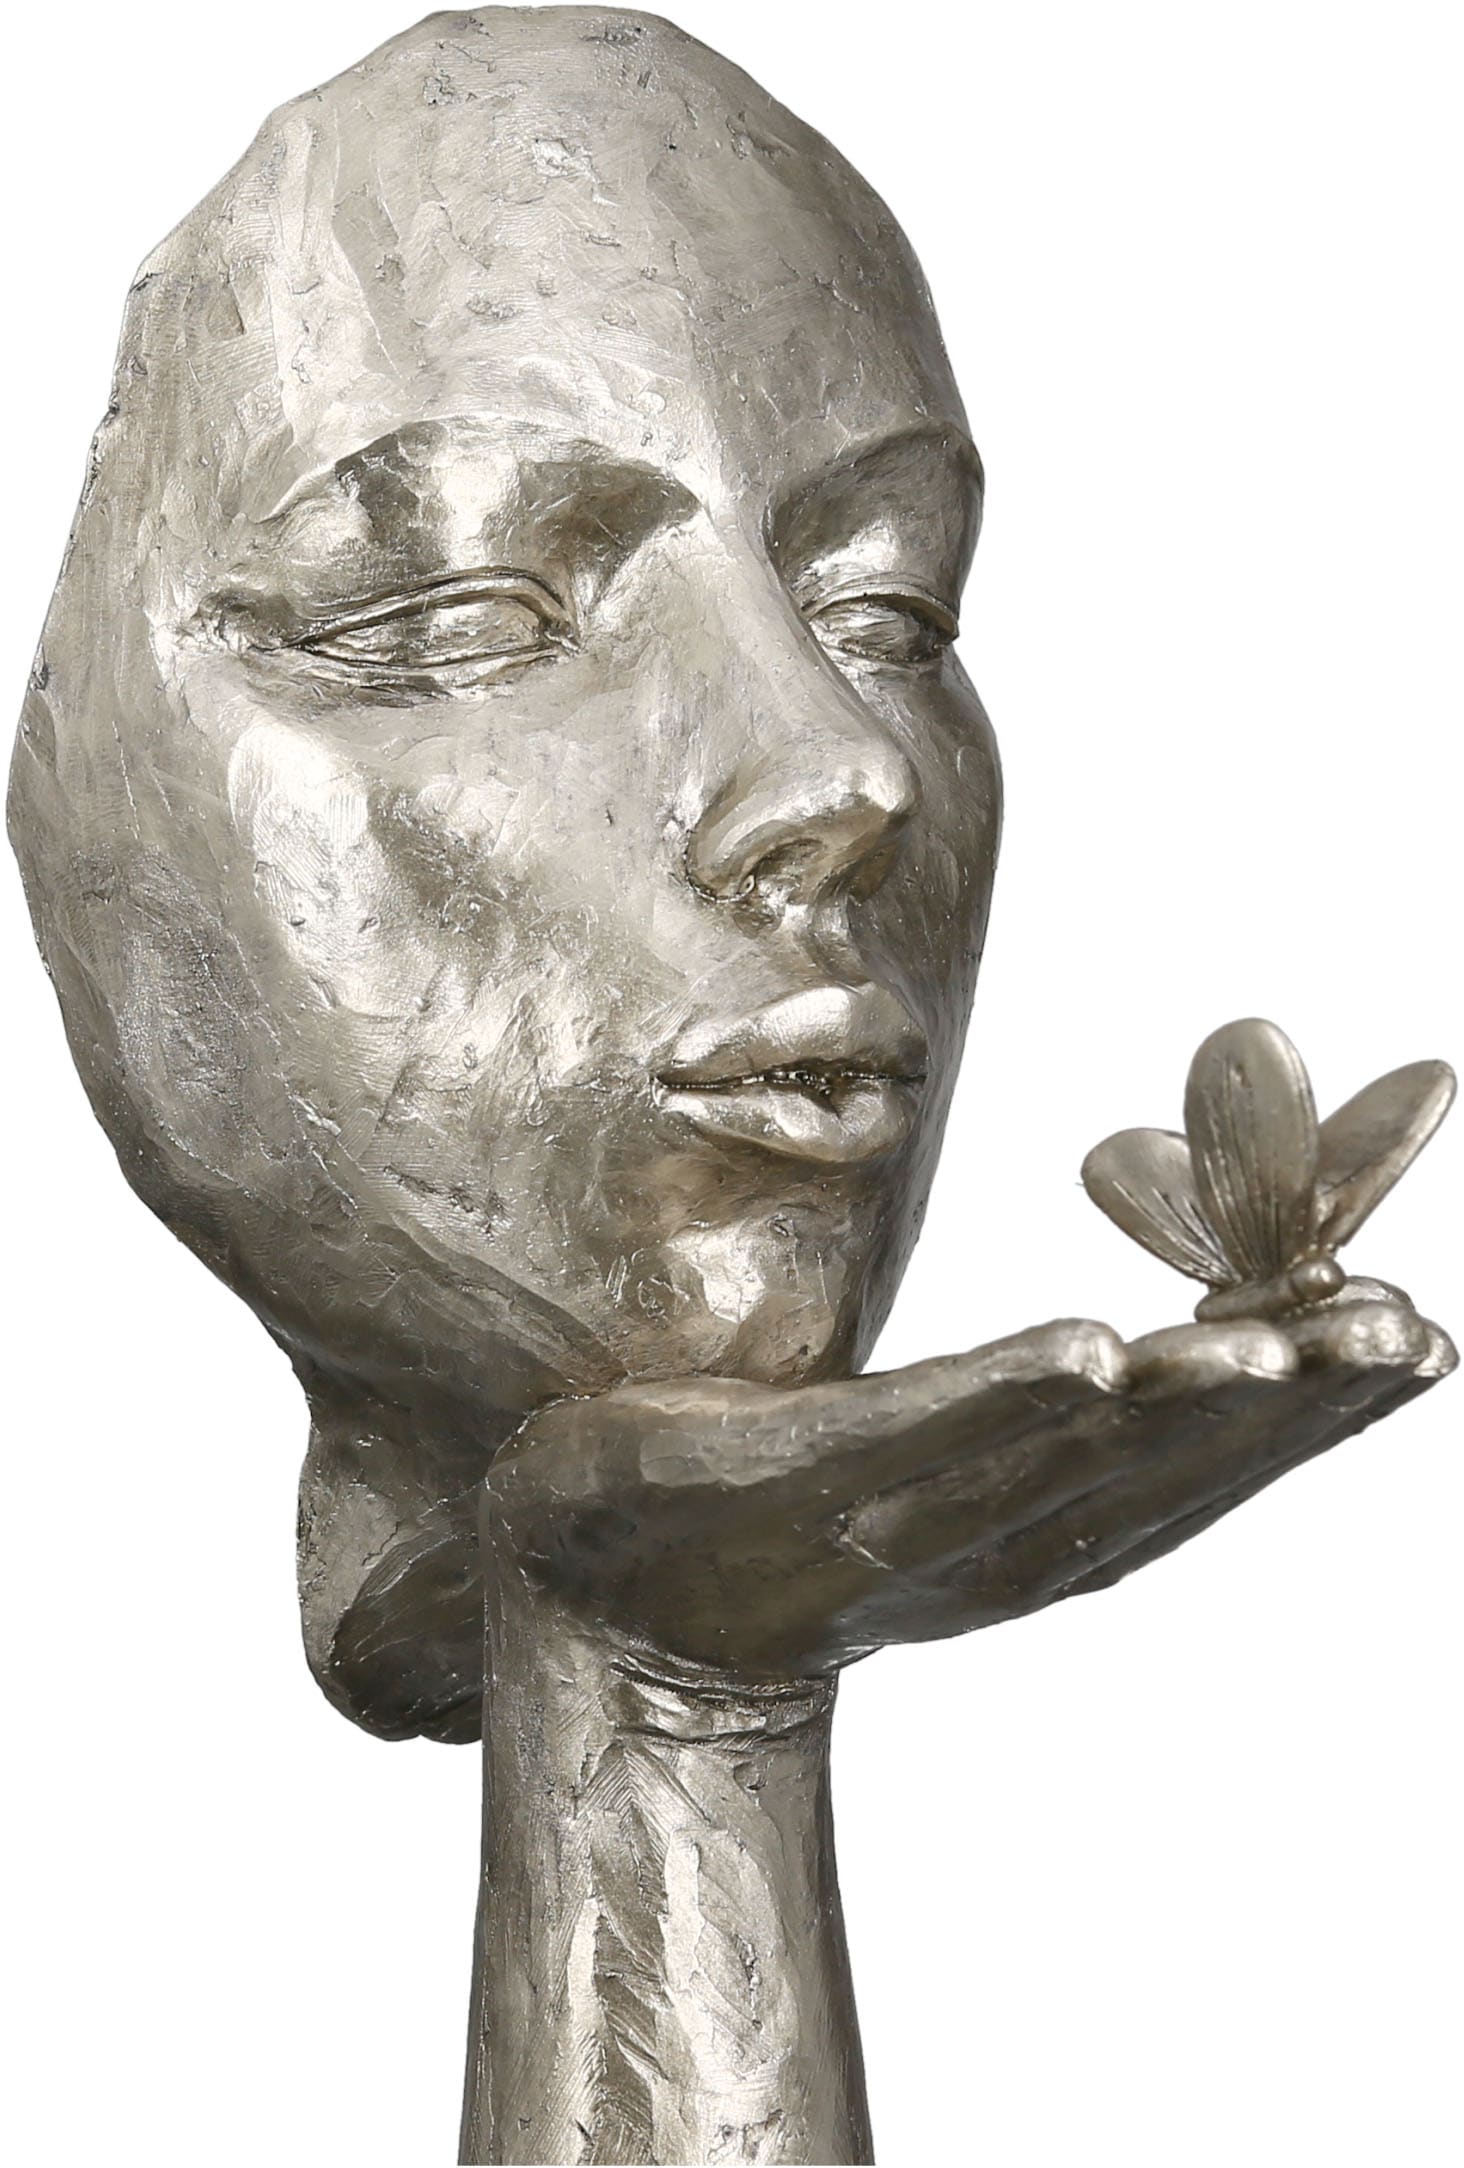 GILDE Dekofigur Polyresin kaufen »Skulptur antikfinish«, Desire, silberfarben